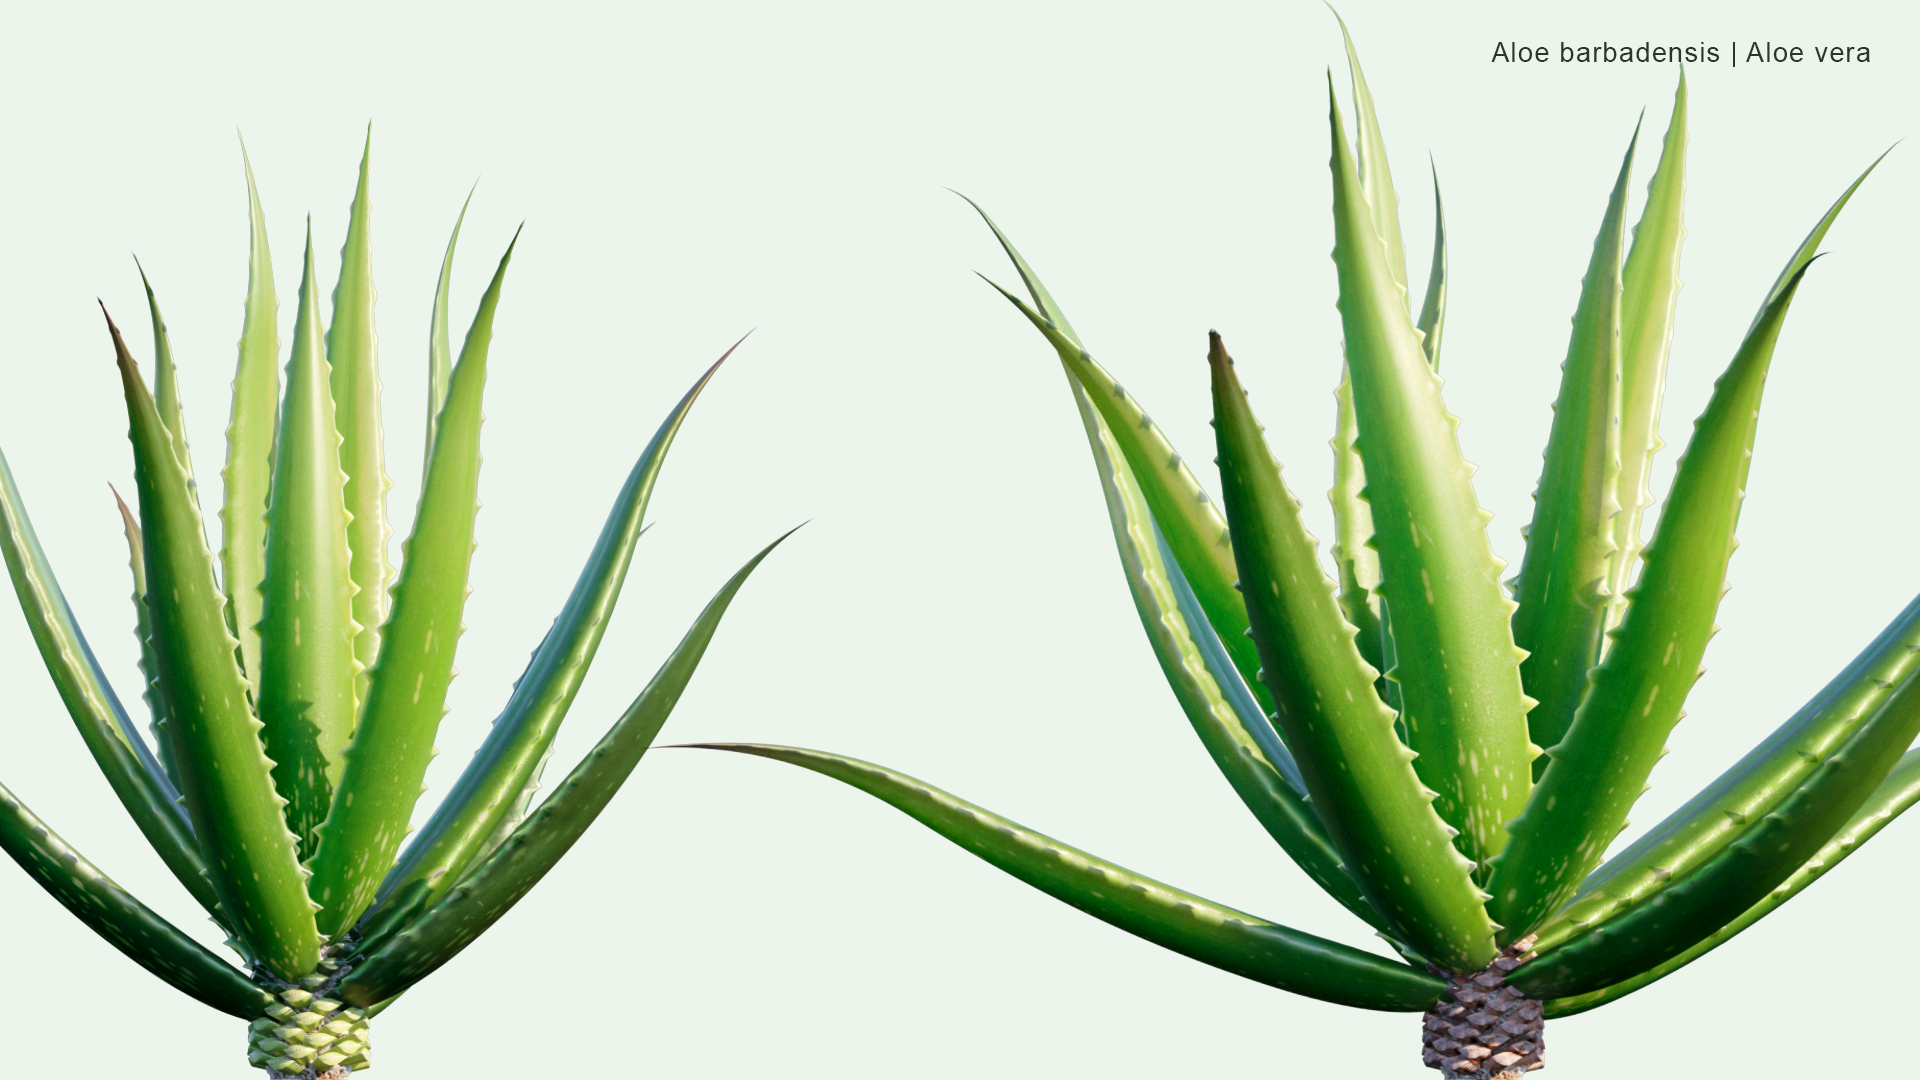 2D Aloe Barbadensis - Aloe Vera